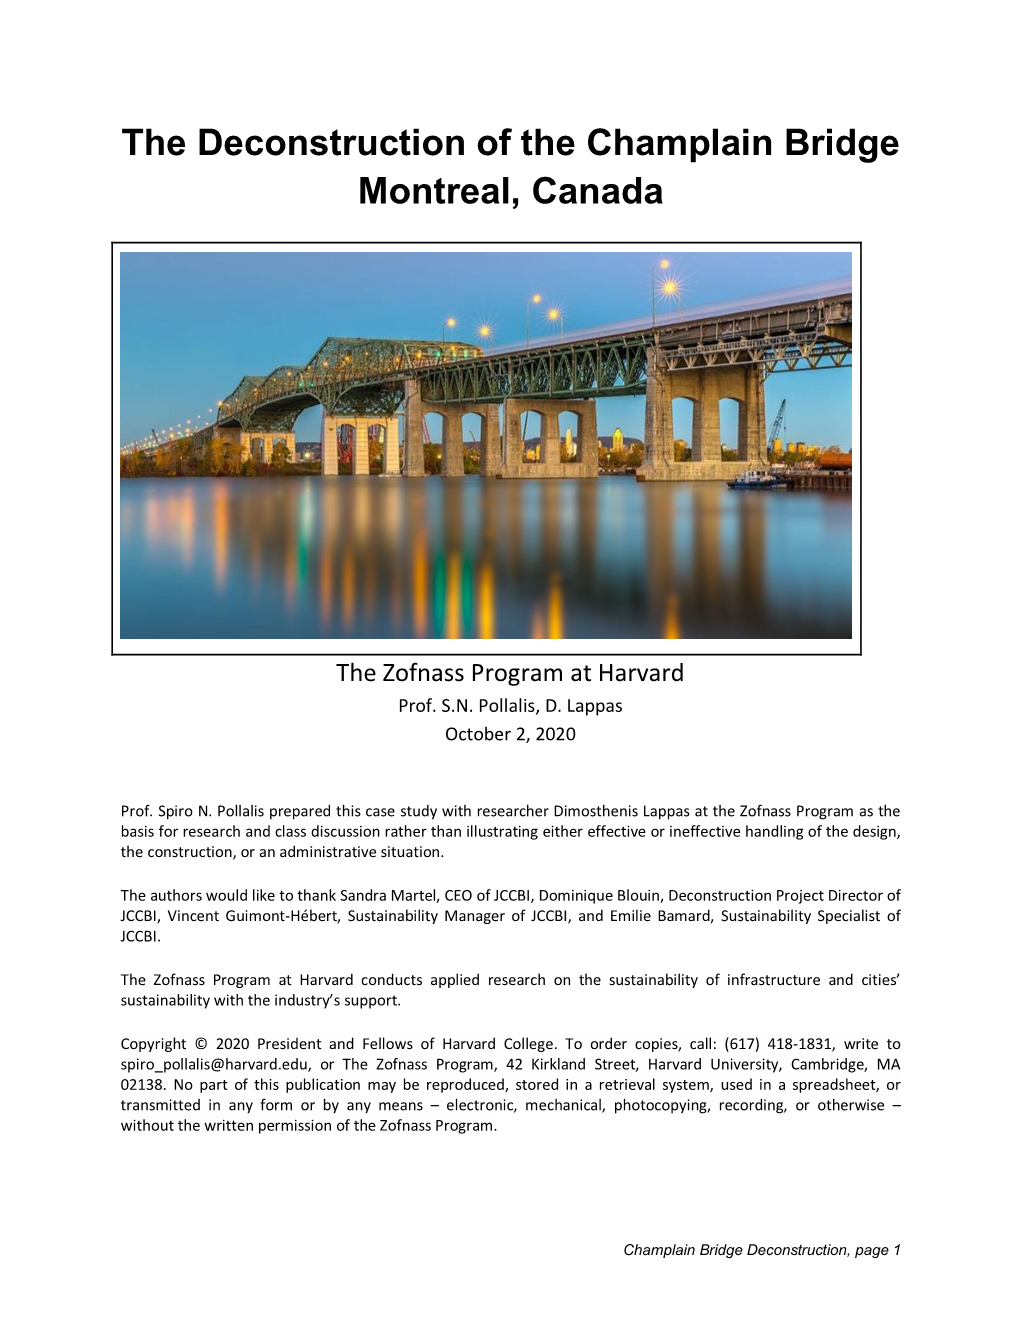 The Deconstruction of the Champlain Bridge Montreal, Canada